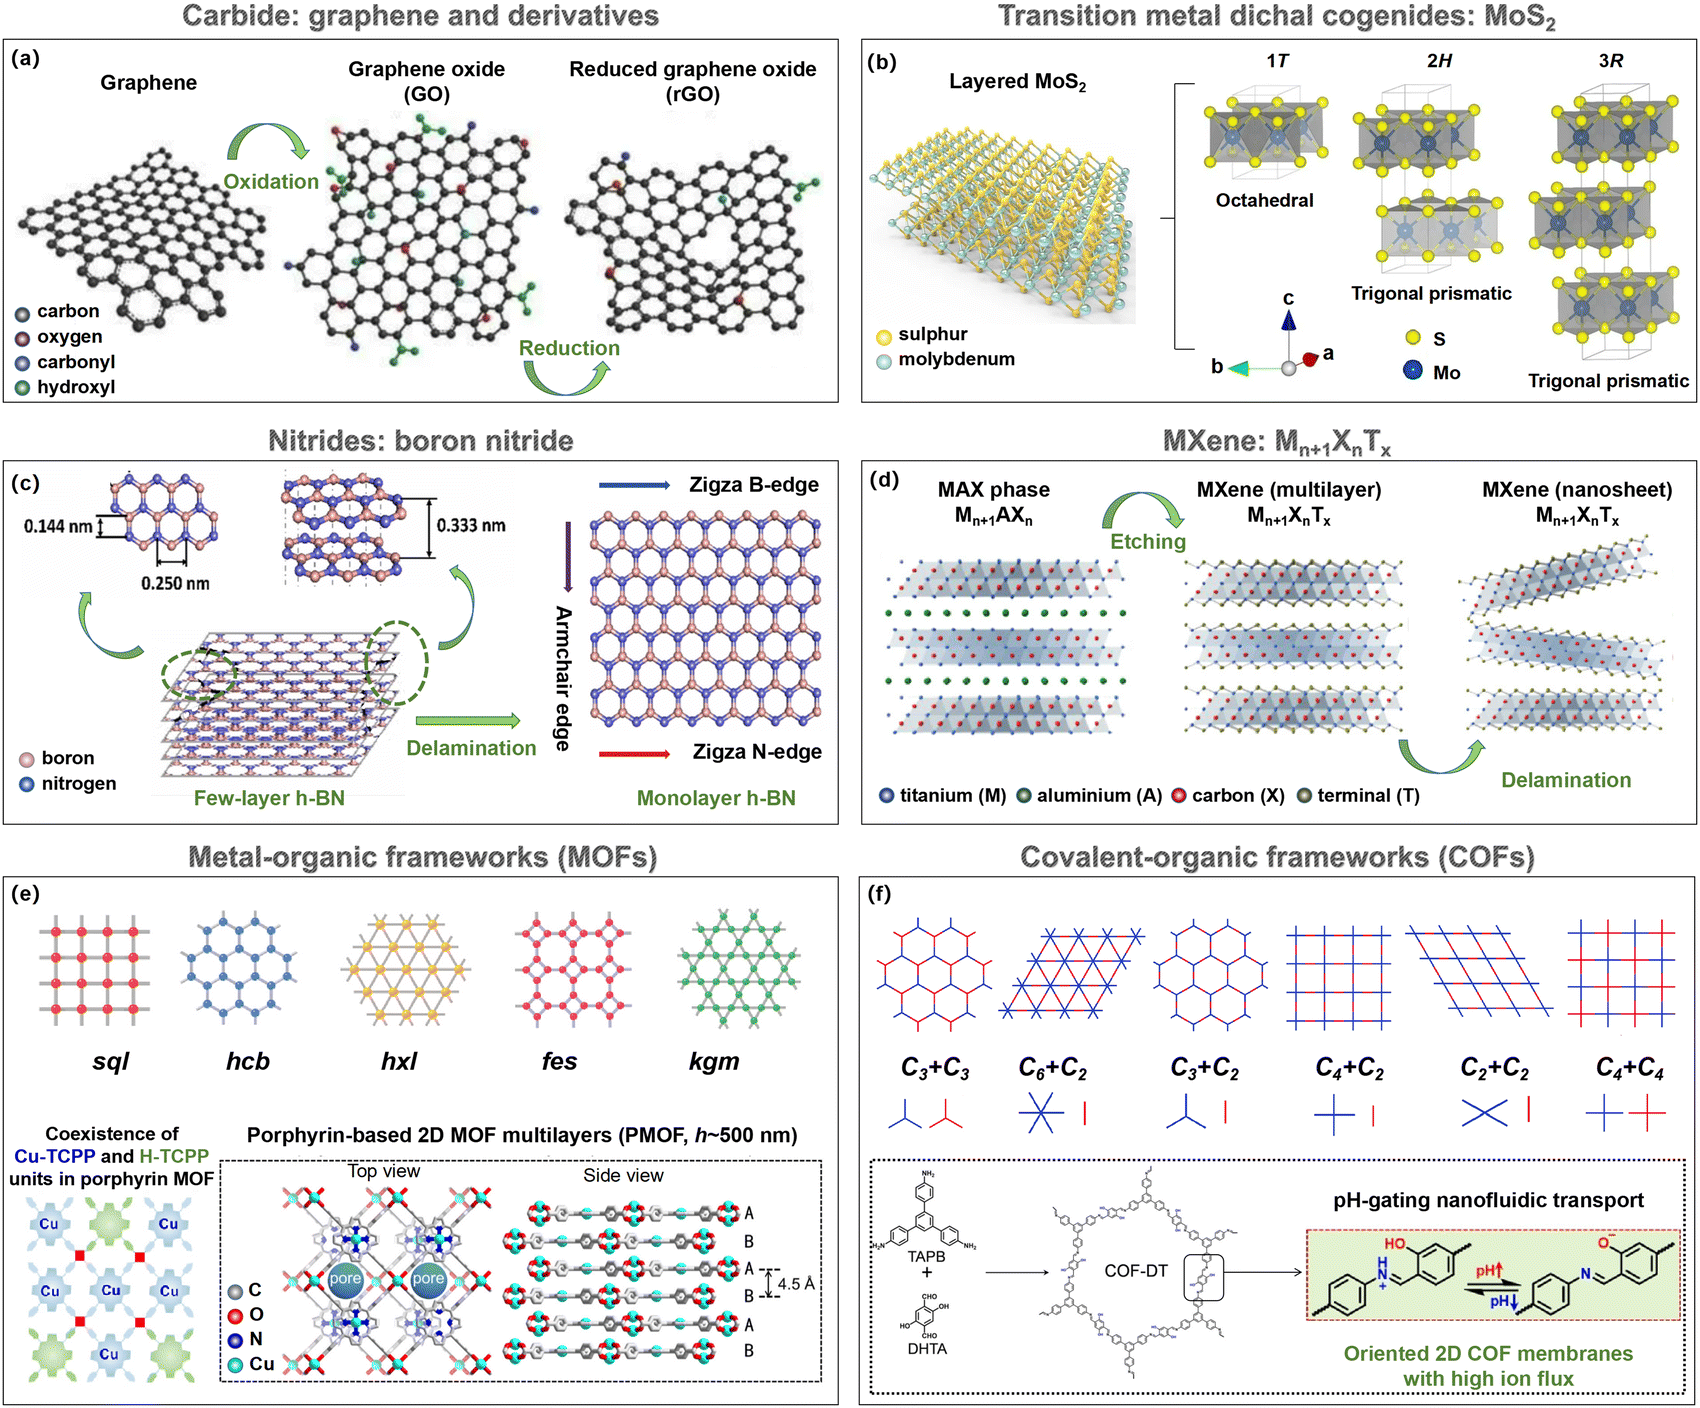 Bioinspired 2D nanofluidic membranes for energy applications 